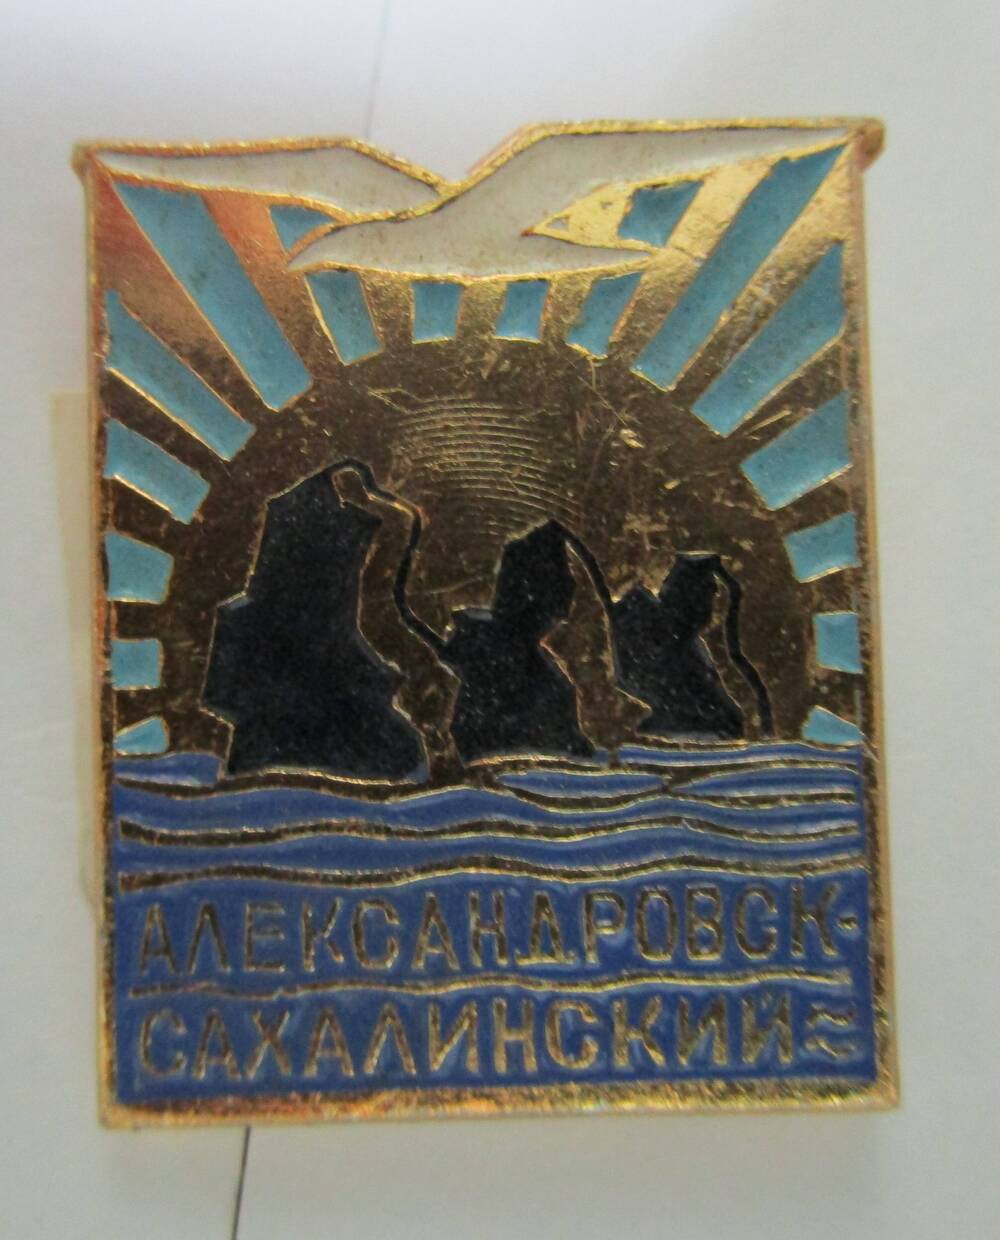 Значок «Александровск - Сахалинский»